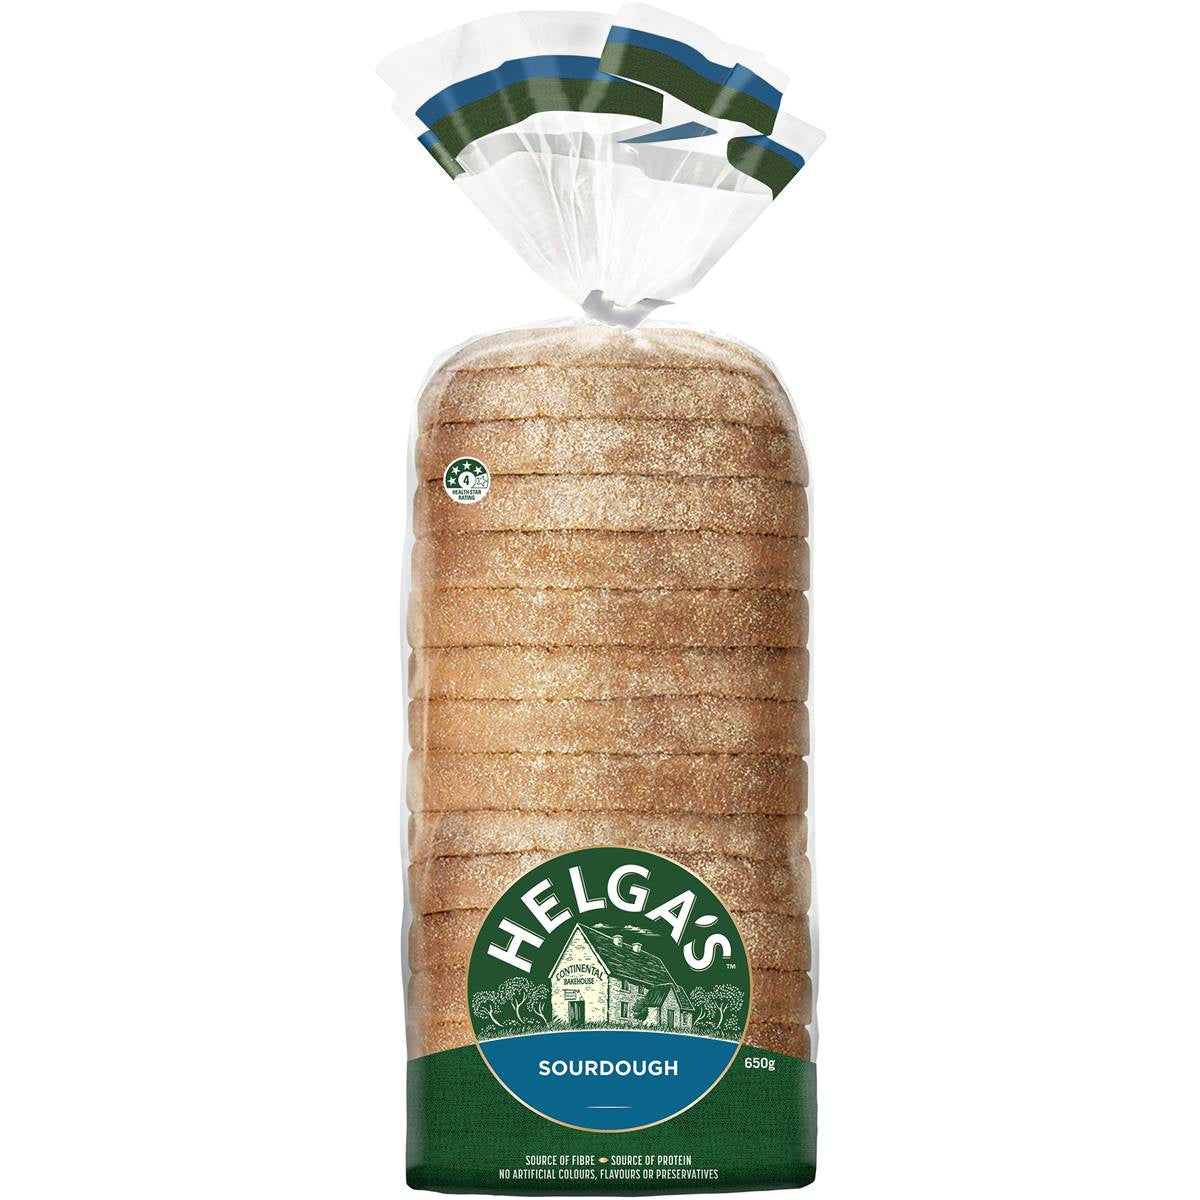 Helga's White Sourdough Bread Loaf